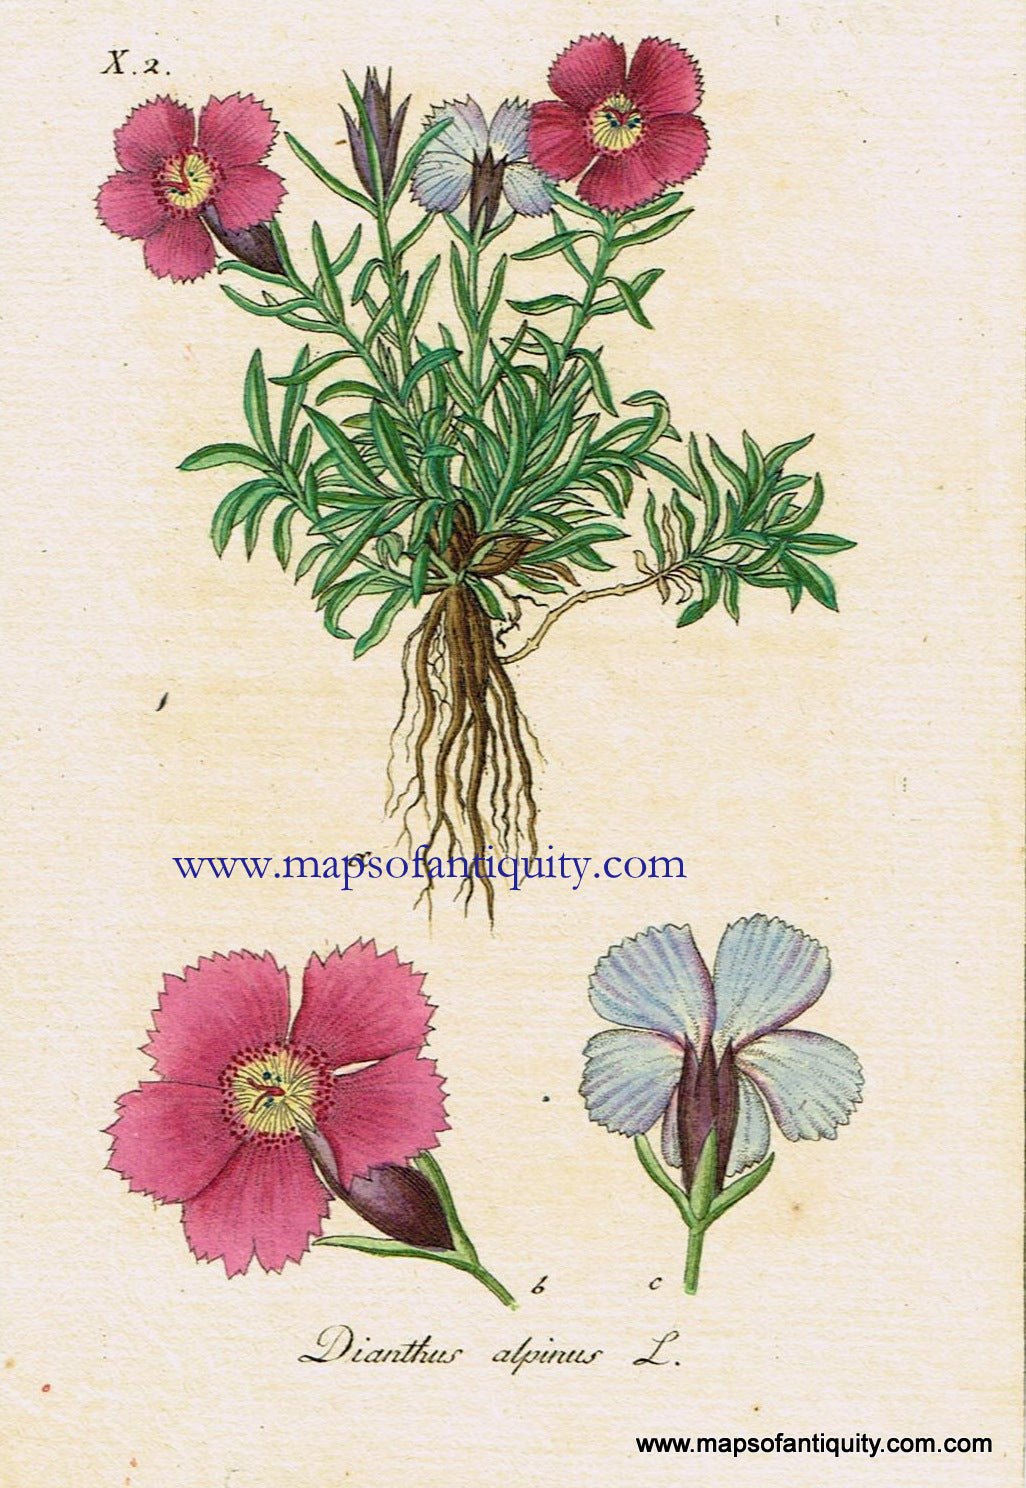 Antique-Hand-Colored-Botanical-Print-Dianthus-alpinus-L.-or-Alpine-Pink-Botanical-Illustration-Antique-Prints--Natural-History-Botanical-1828-Jacob-Sturm-Maps-Of-Antiquity